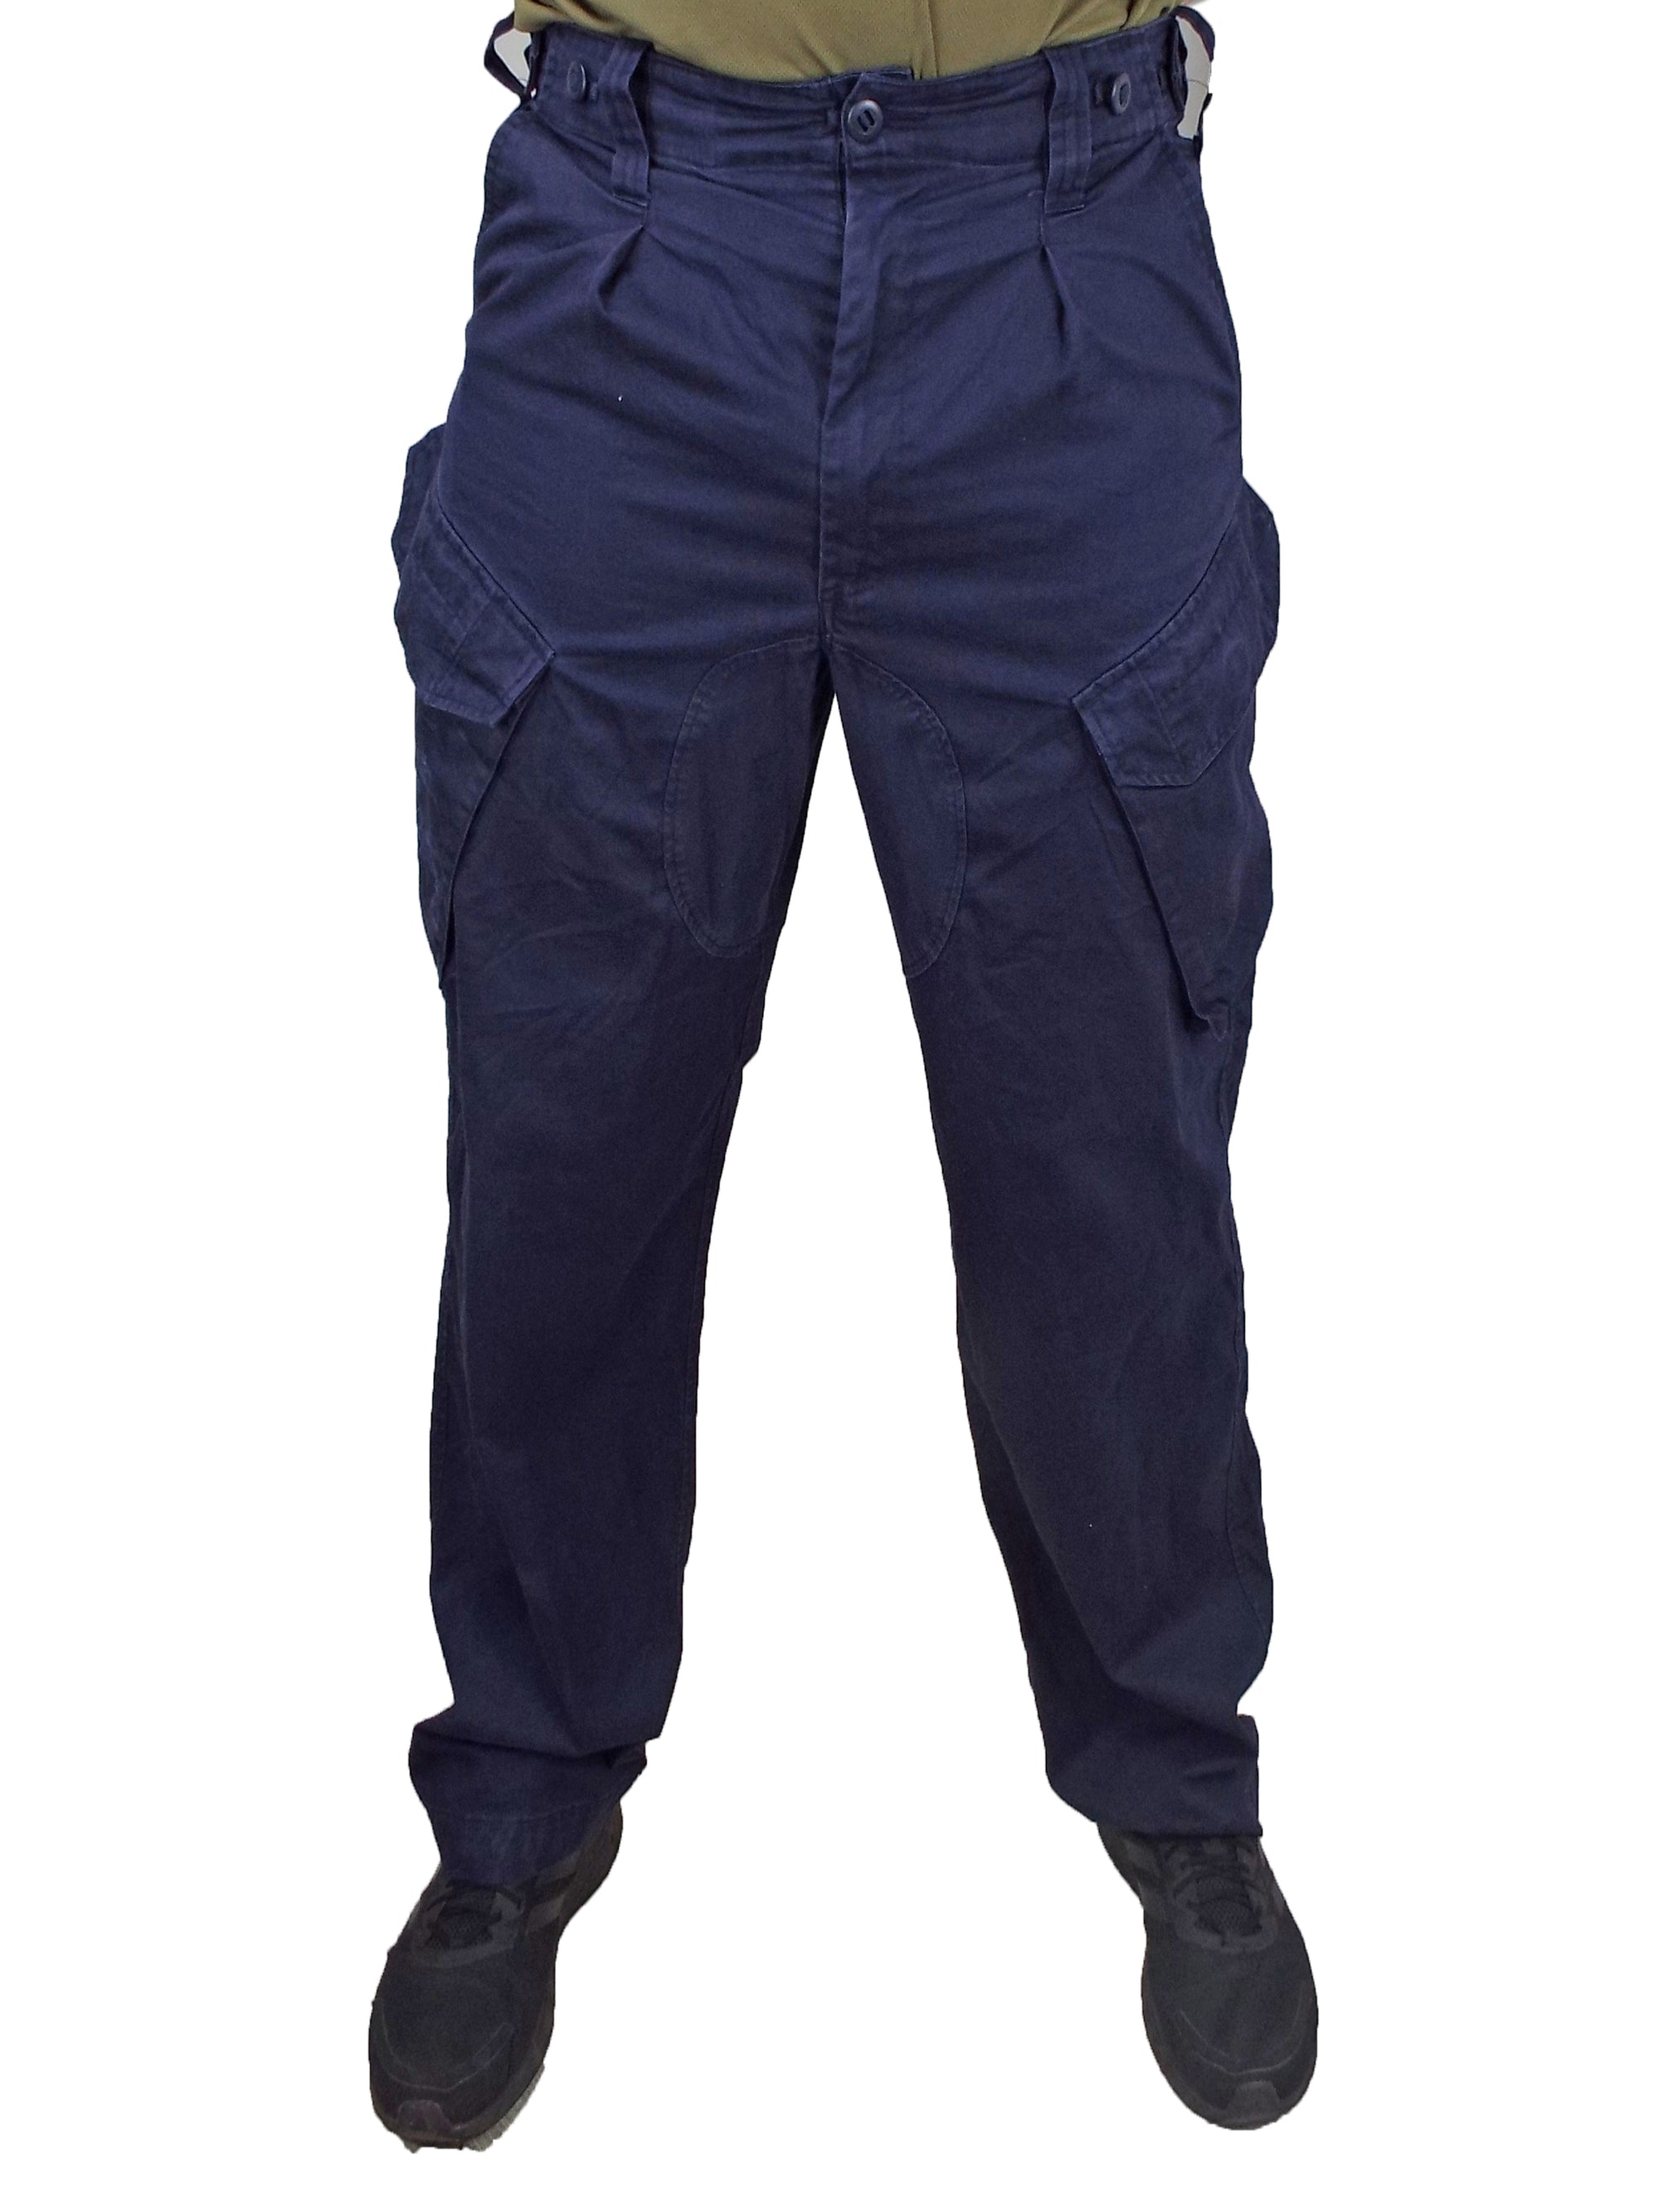 British Royal Navy Dark Blue Combat Trousers - Five pocket - Grade 1